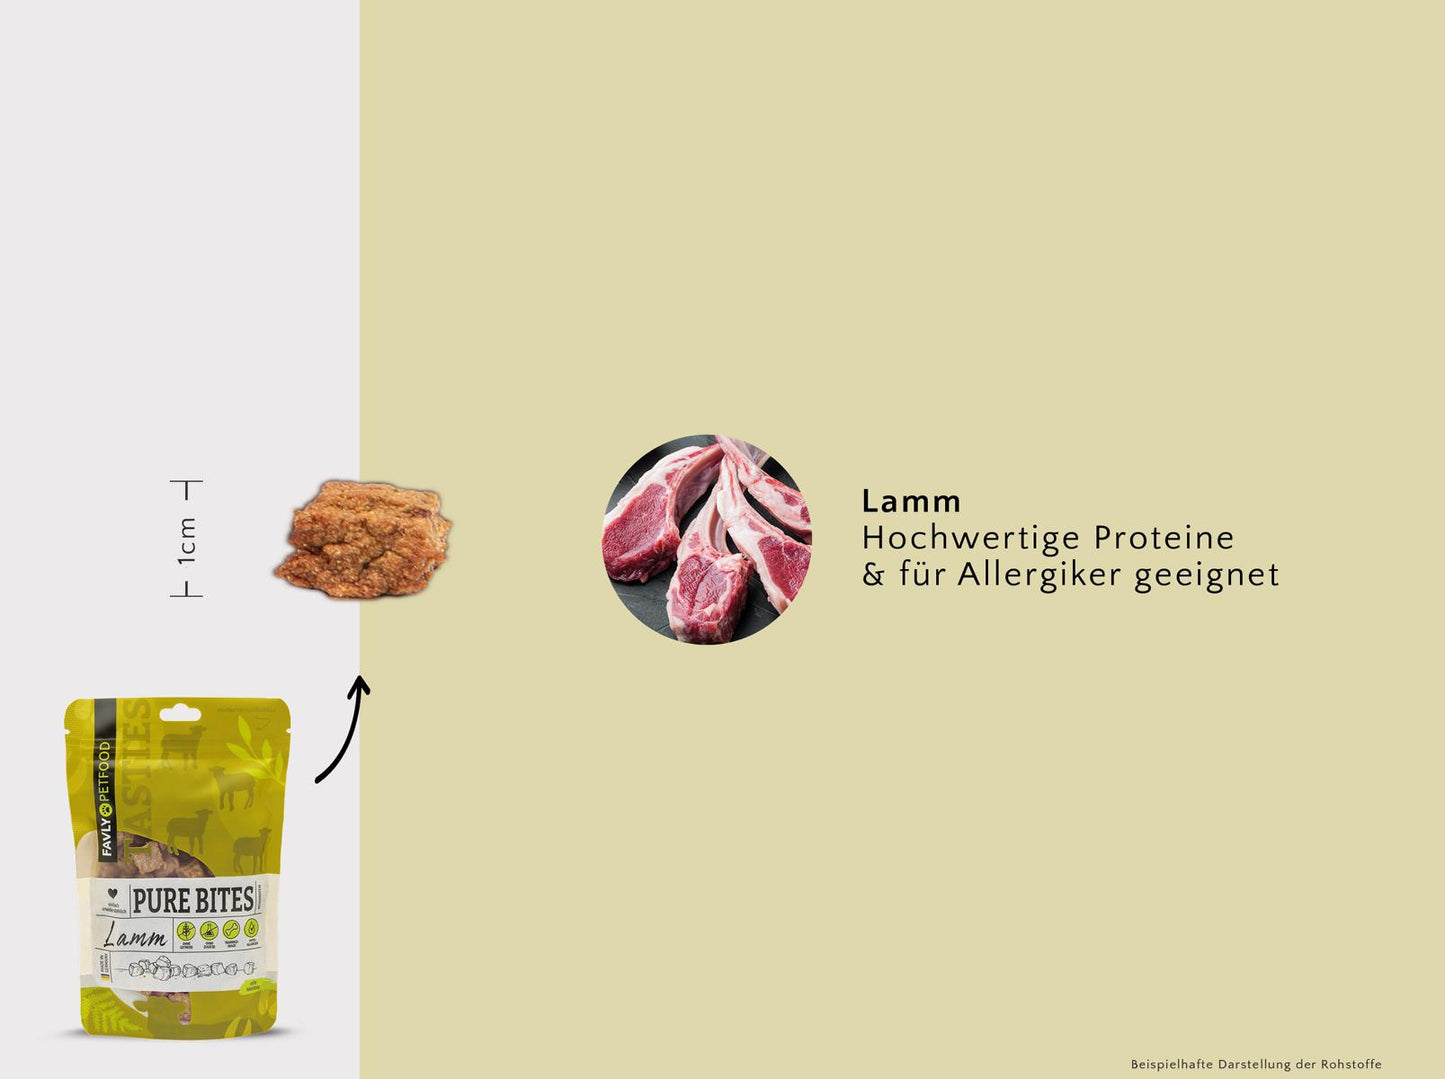 FAVLY Probierpaket "Lamm & Ziege" + GRATIS Futterguide